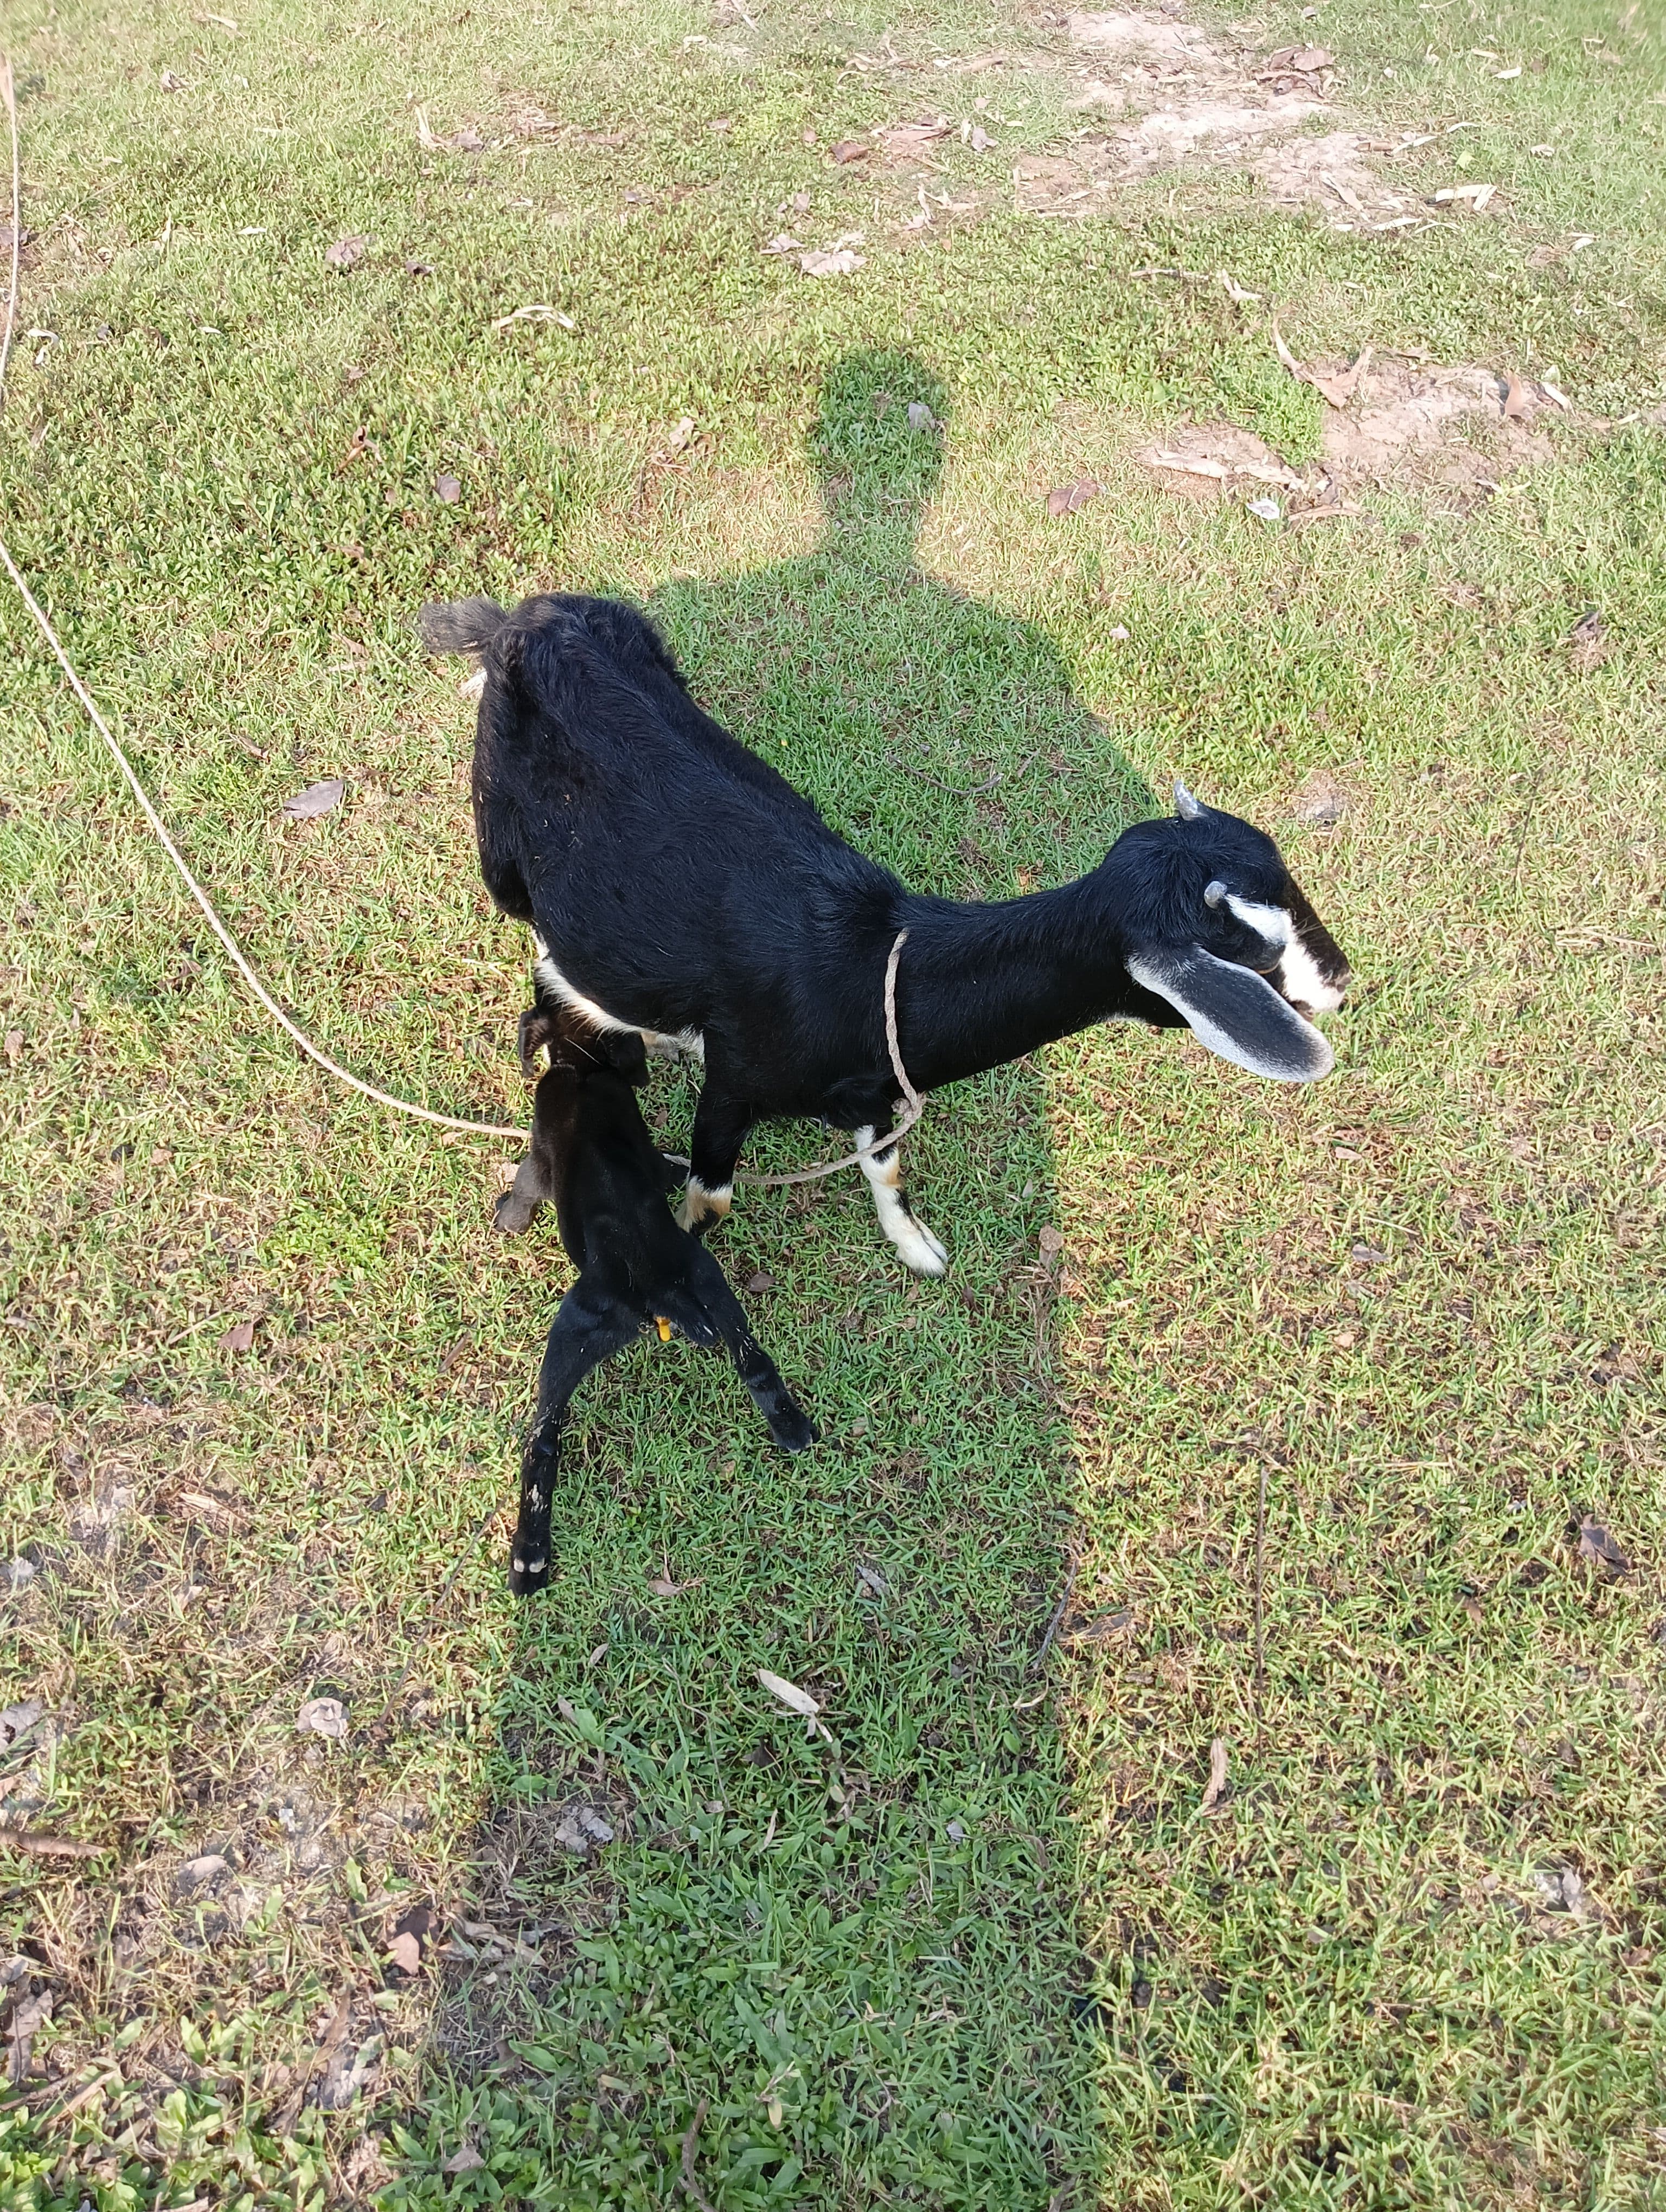 my favorite goat